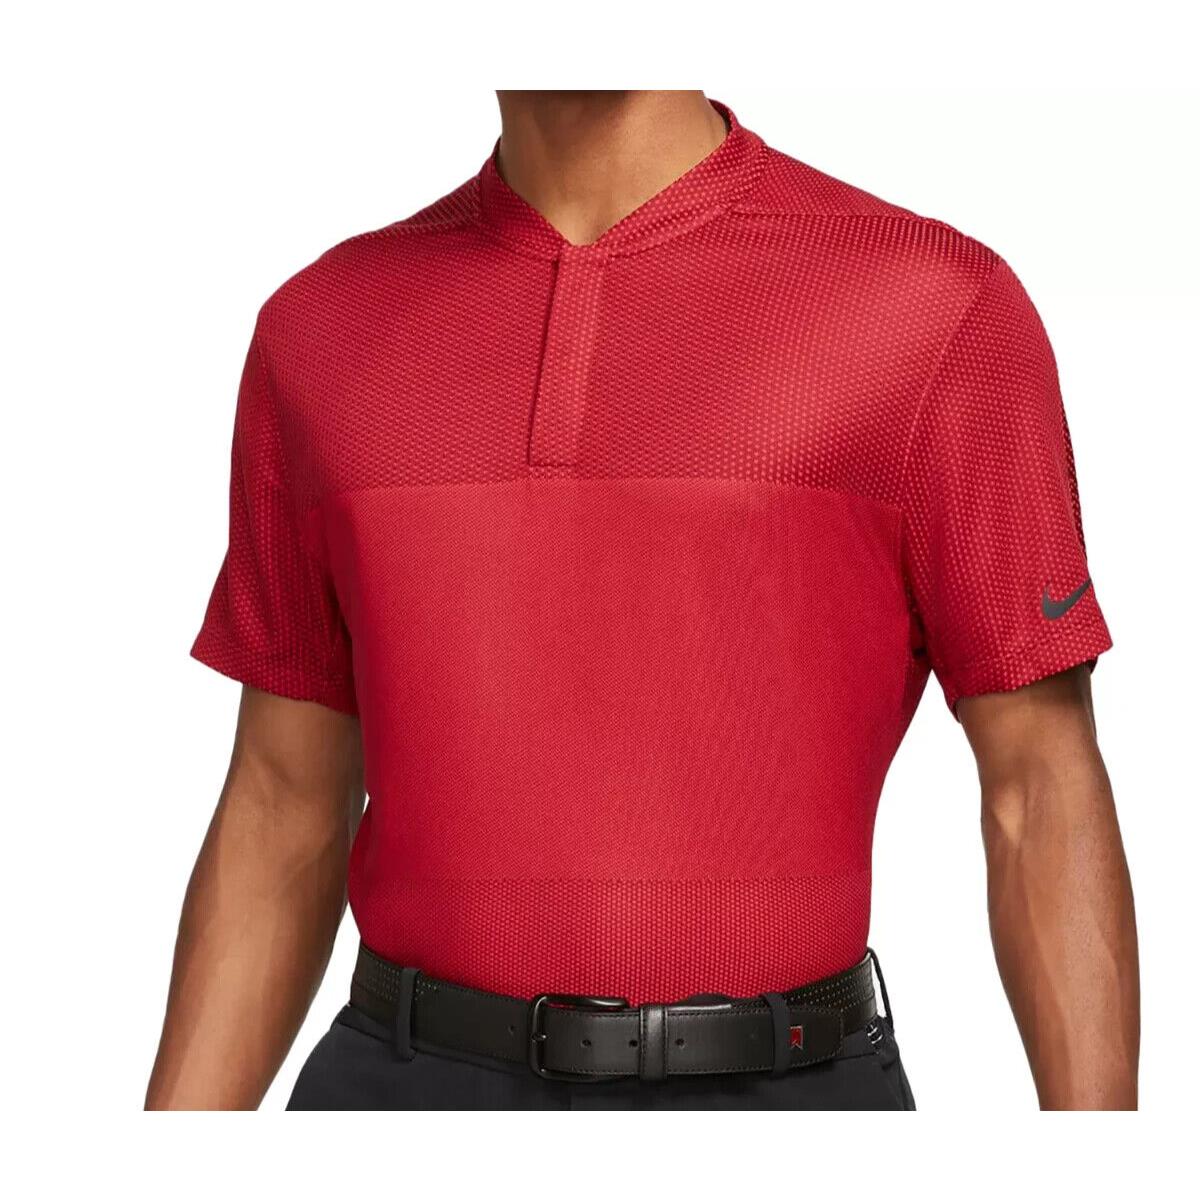 Nike Dri-fit Adv Tiger Woods Blade Golf Shirt - CU9524 677 - Red - Size XL